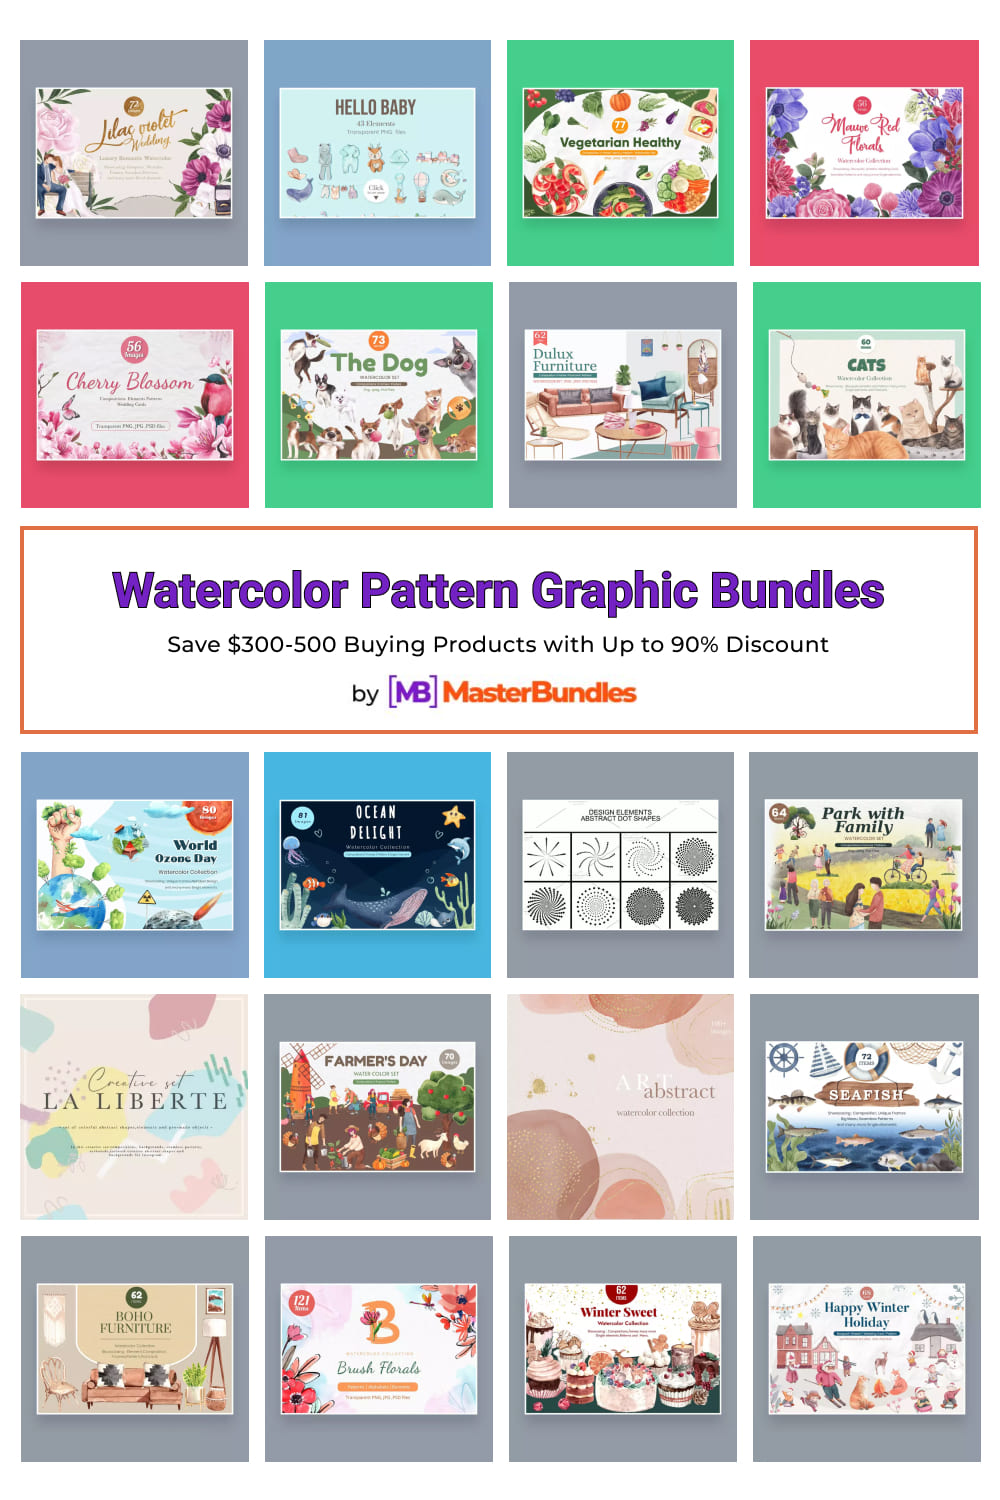 Watercolor Pattern Graphic Bundles for Pinterest.